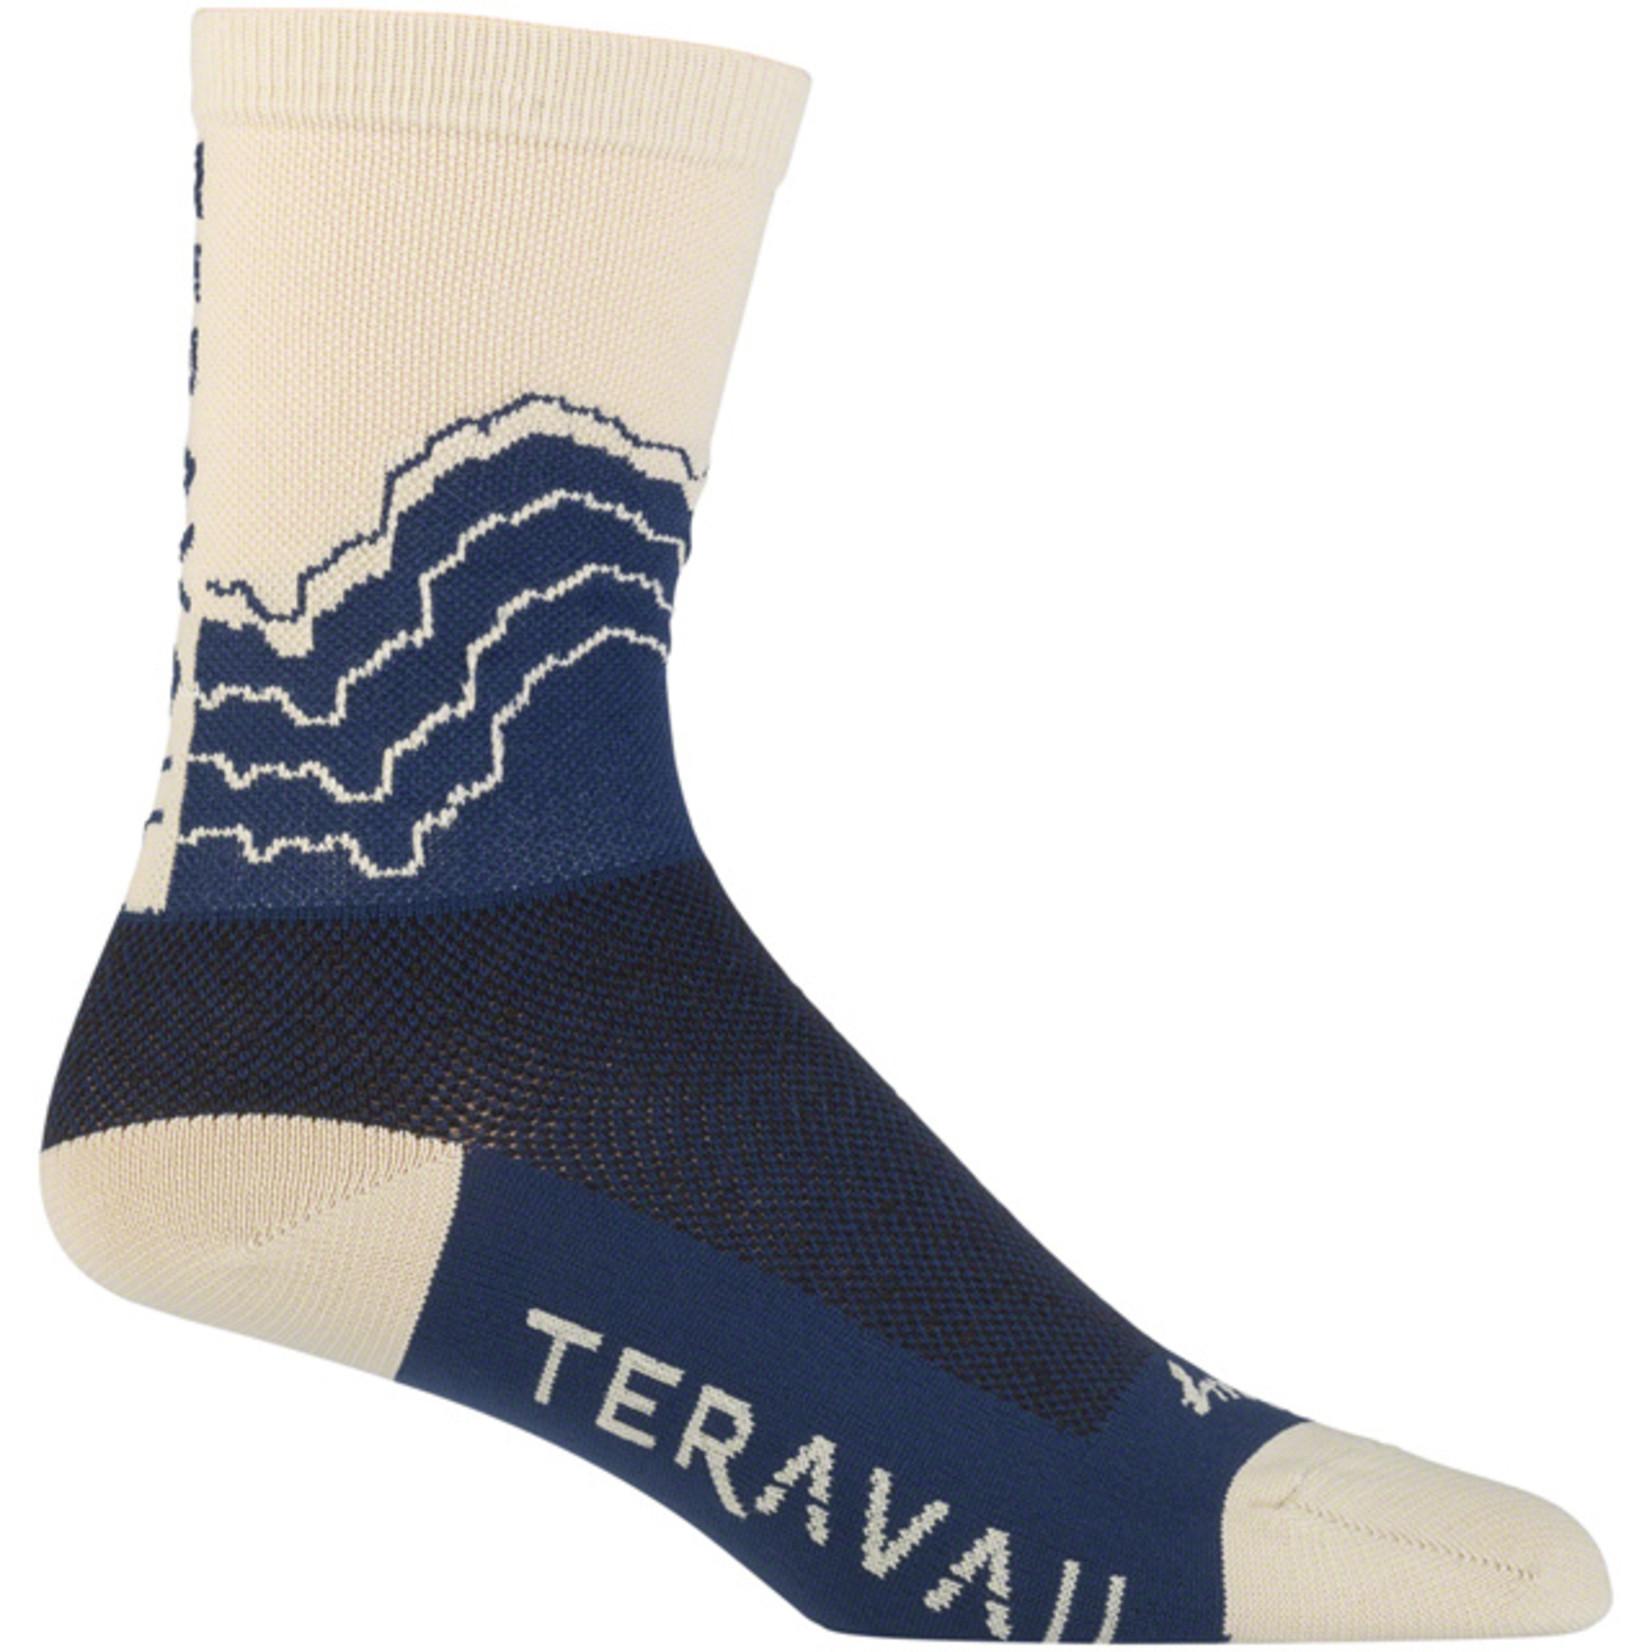 Teravail Teravail Logo Socks - 6 Inch Cuff, Navy, Khaki, Small/Medium